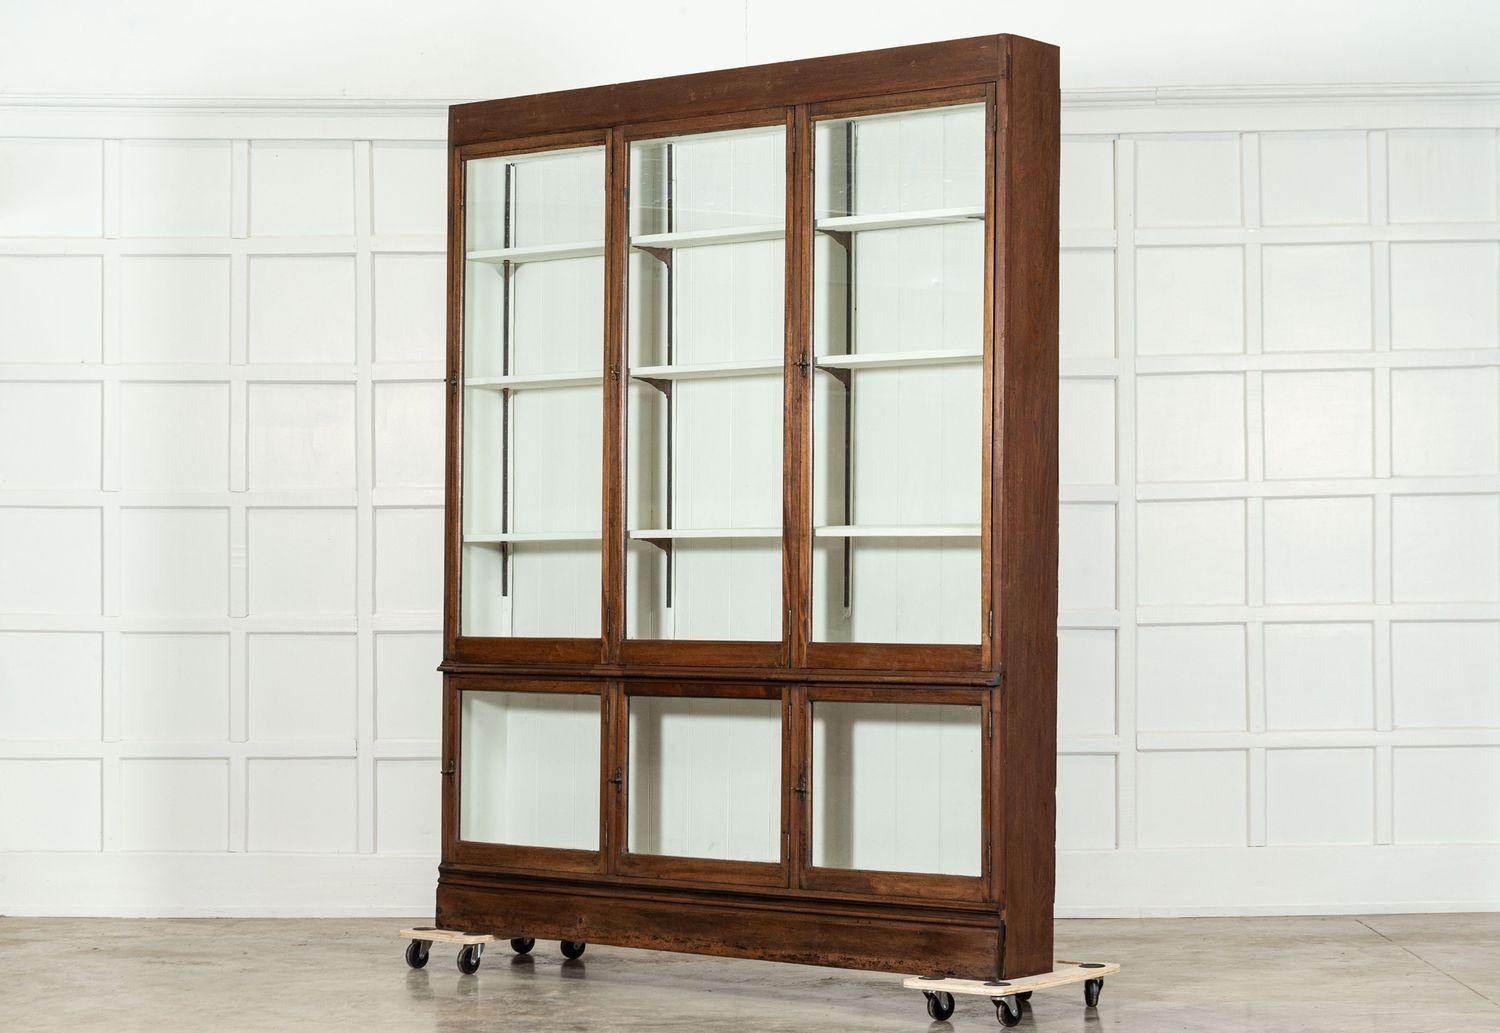 circa 1890
Large 19thC English Oak & Mahogany Glazed Bookcase Cabinet
sku 1789
W189 x D28 x H231 cm
Weight 88 kg